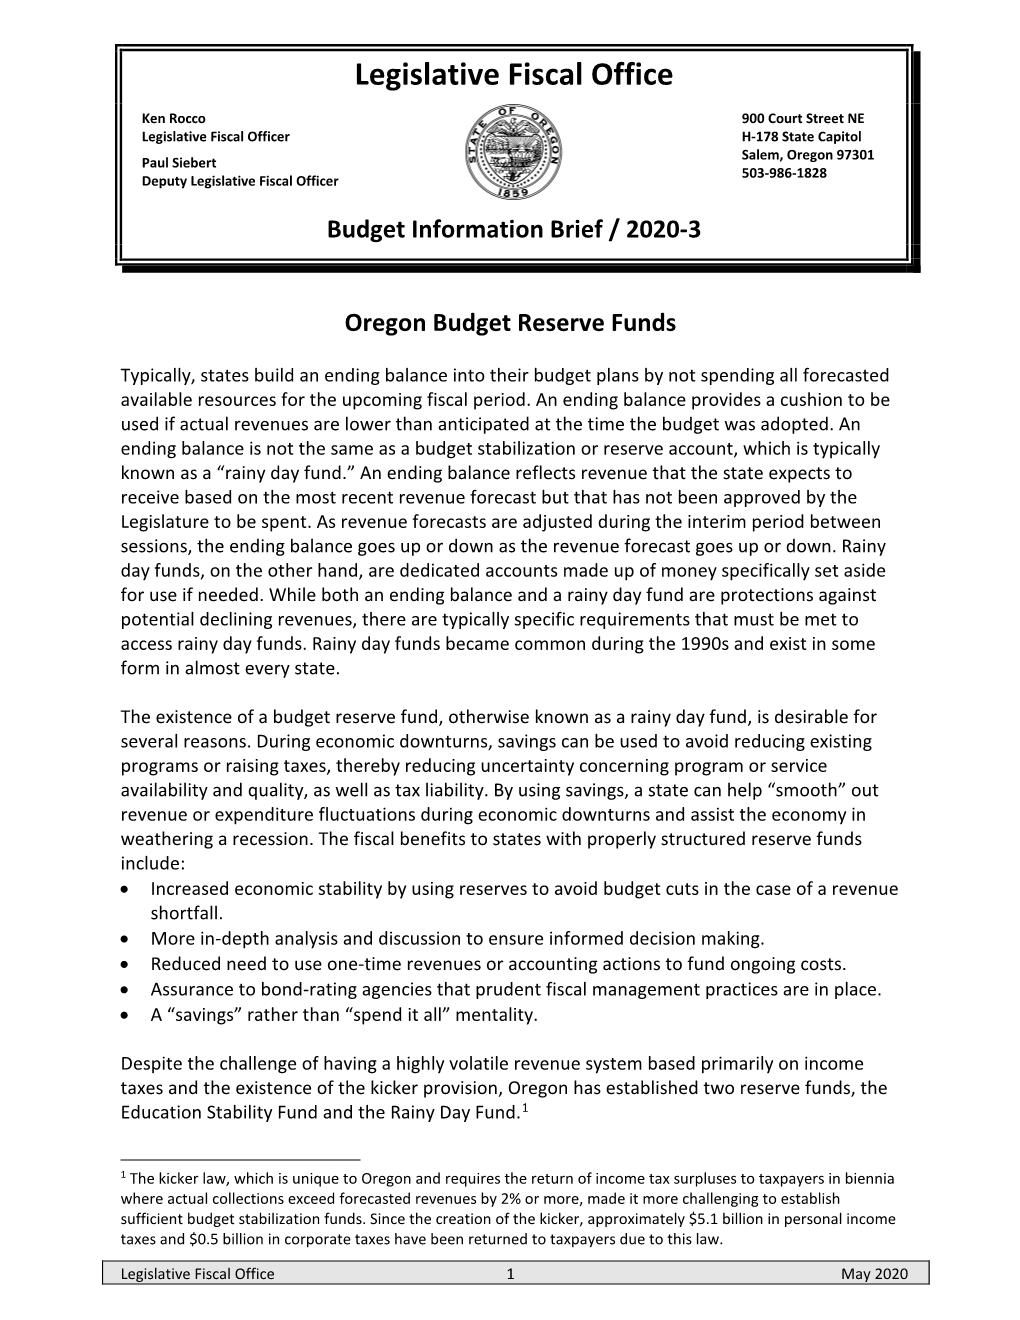 Legislative Fiscal Office Budget Brief